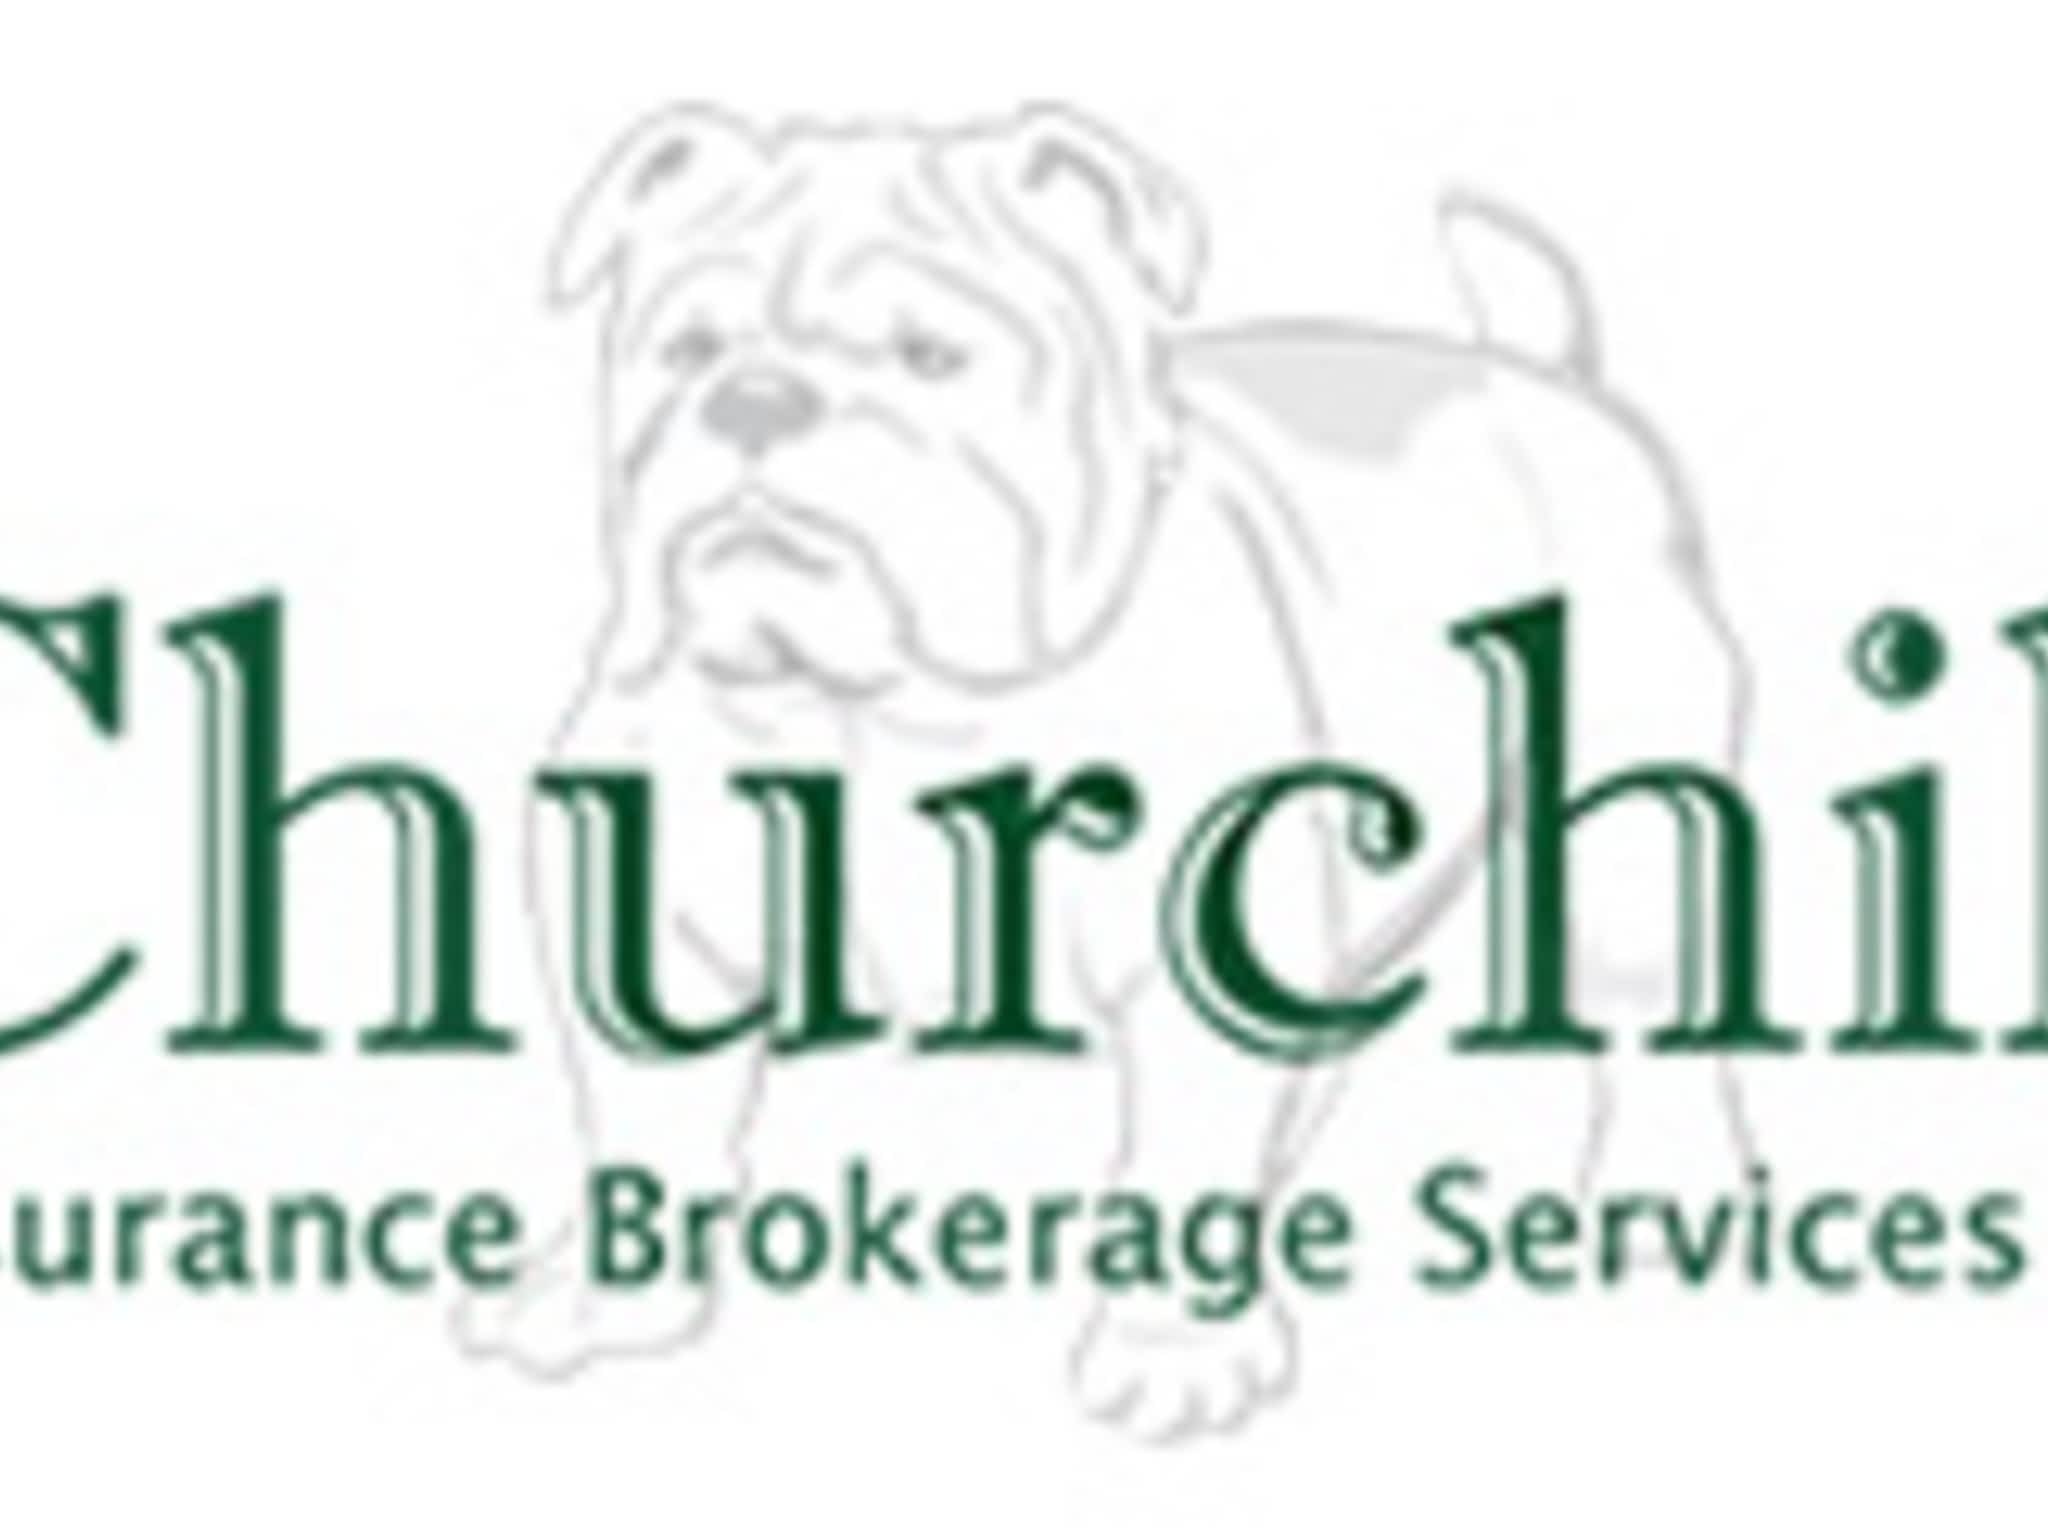 photo Churchill Insurance Brokerage